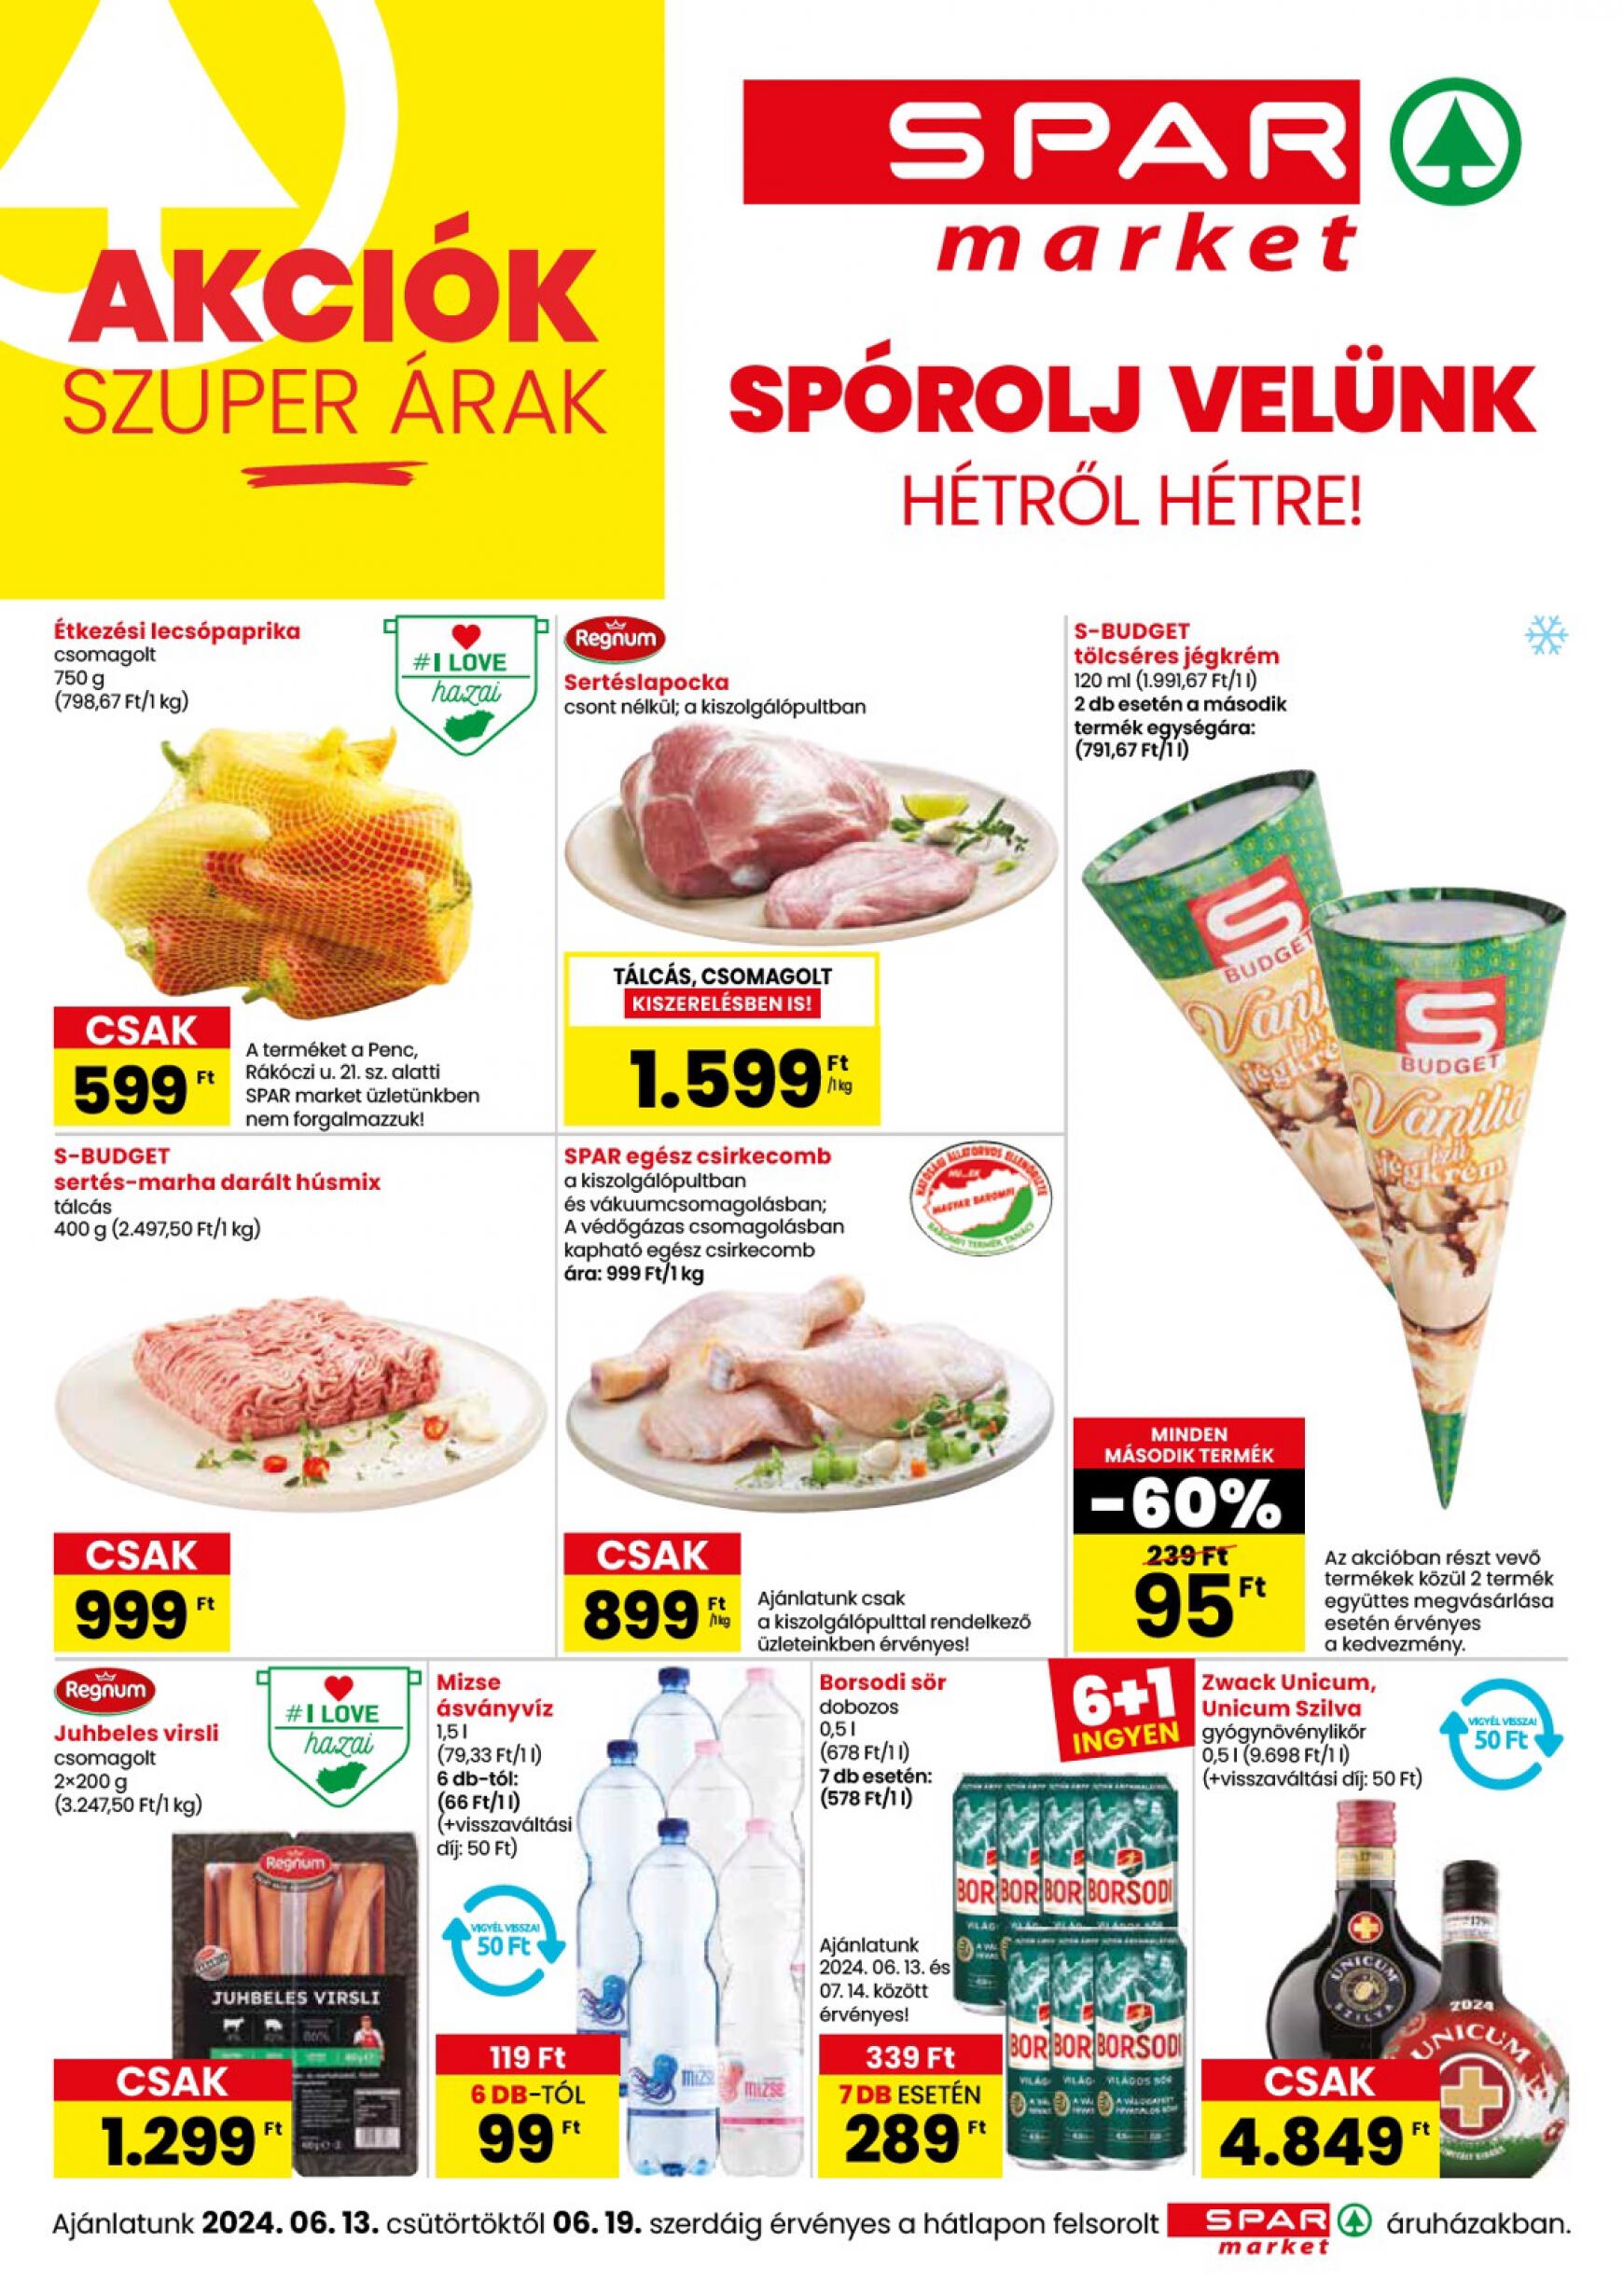 spar - Aktuális újság SPAR market 06.13. - 06.19. - page: 1